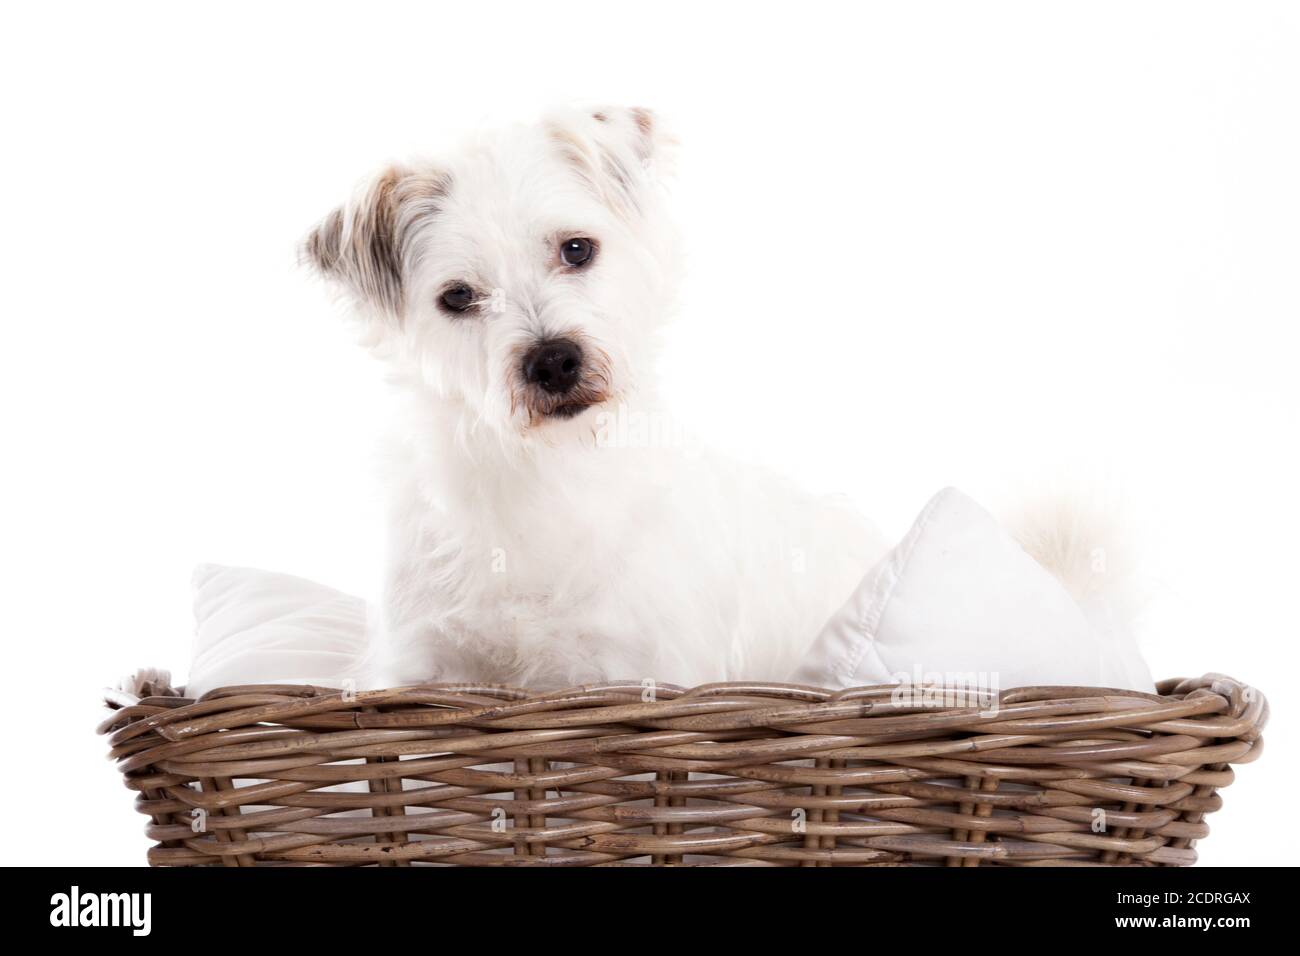 Sweet dog in basket Stock Photo